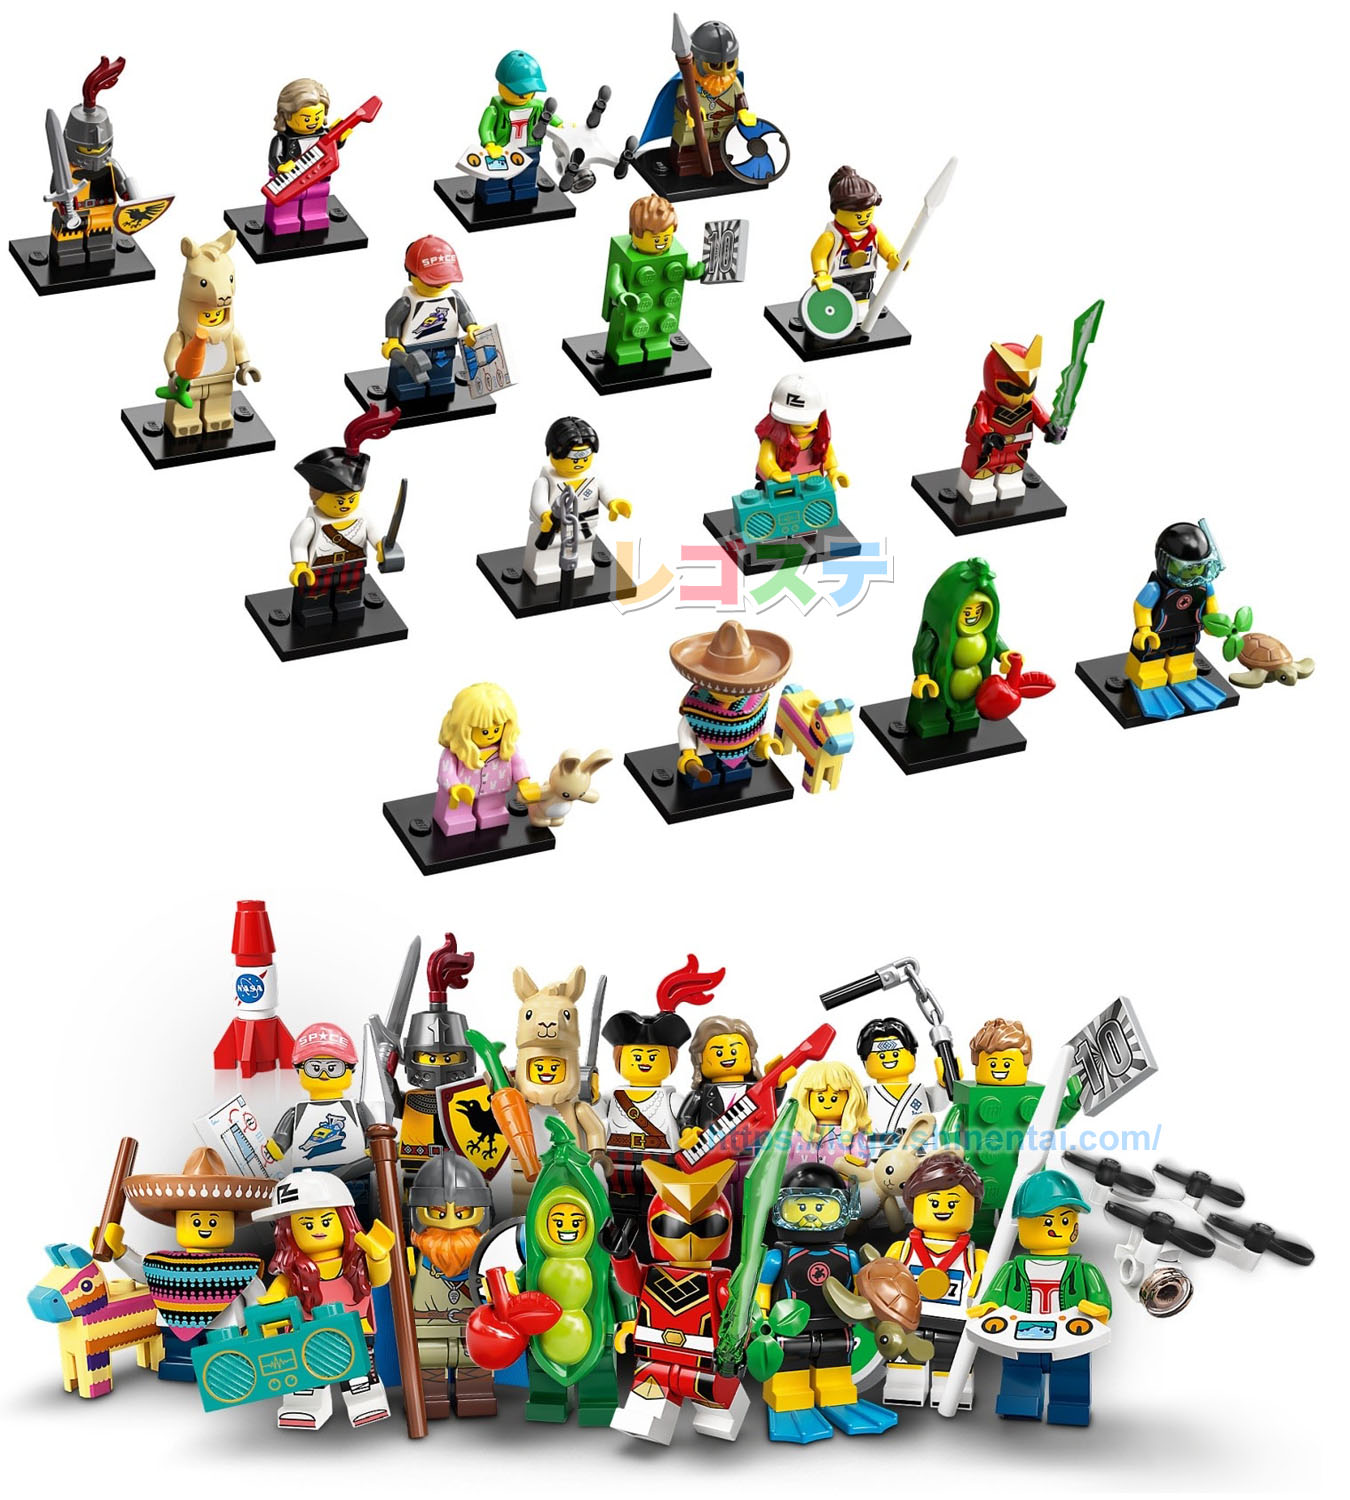 Lego ミニフィグ シリーズ 年後半legoミニフィギュア新製品公式画像公開 スタッズ レゴの楽しさを伝えるwebメディア